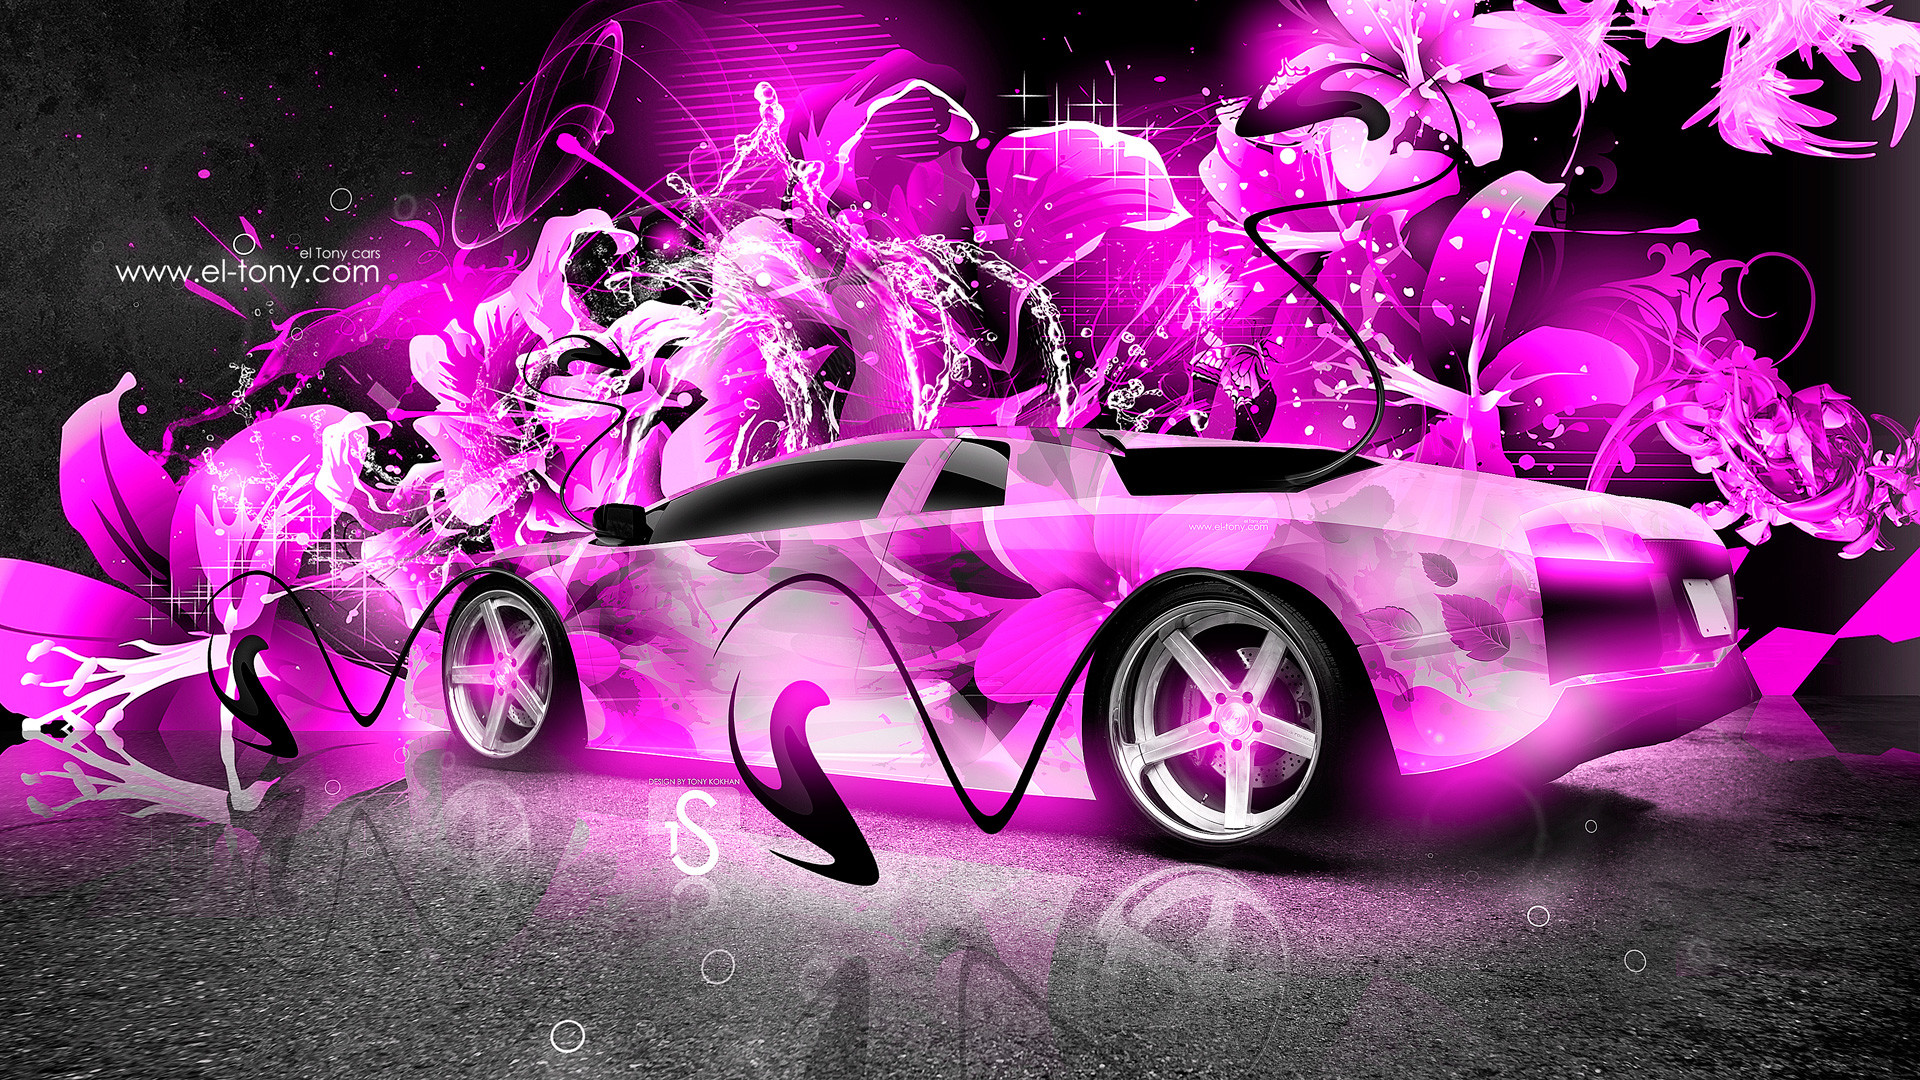 1920x1080 ... Lamborghini-Murcielago-Super-Abstract-Car-2013-Pink-HD- ...